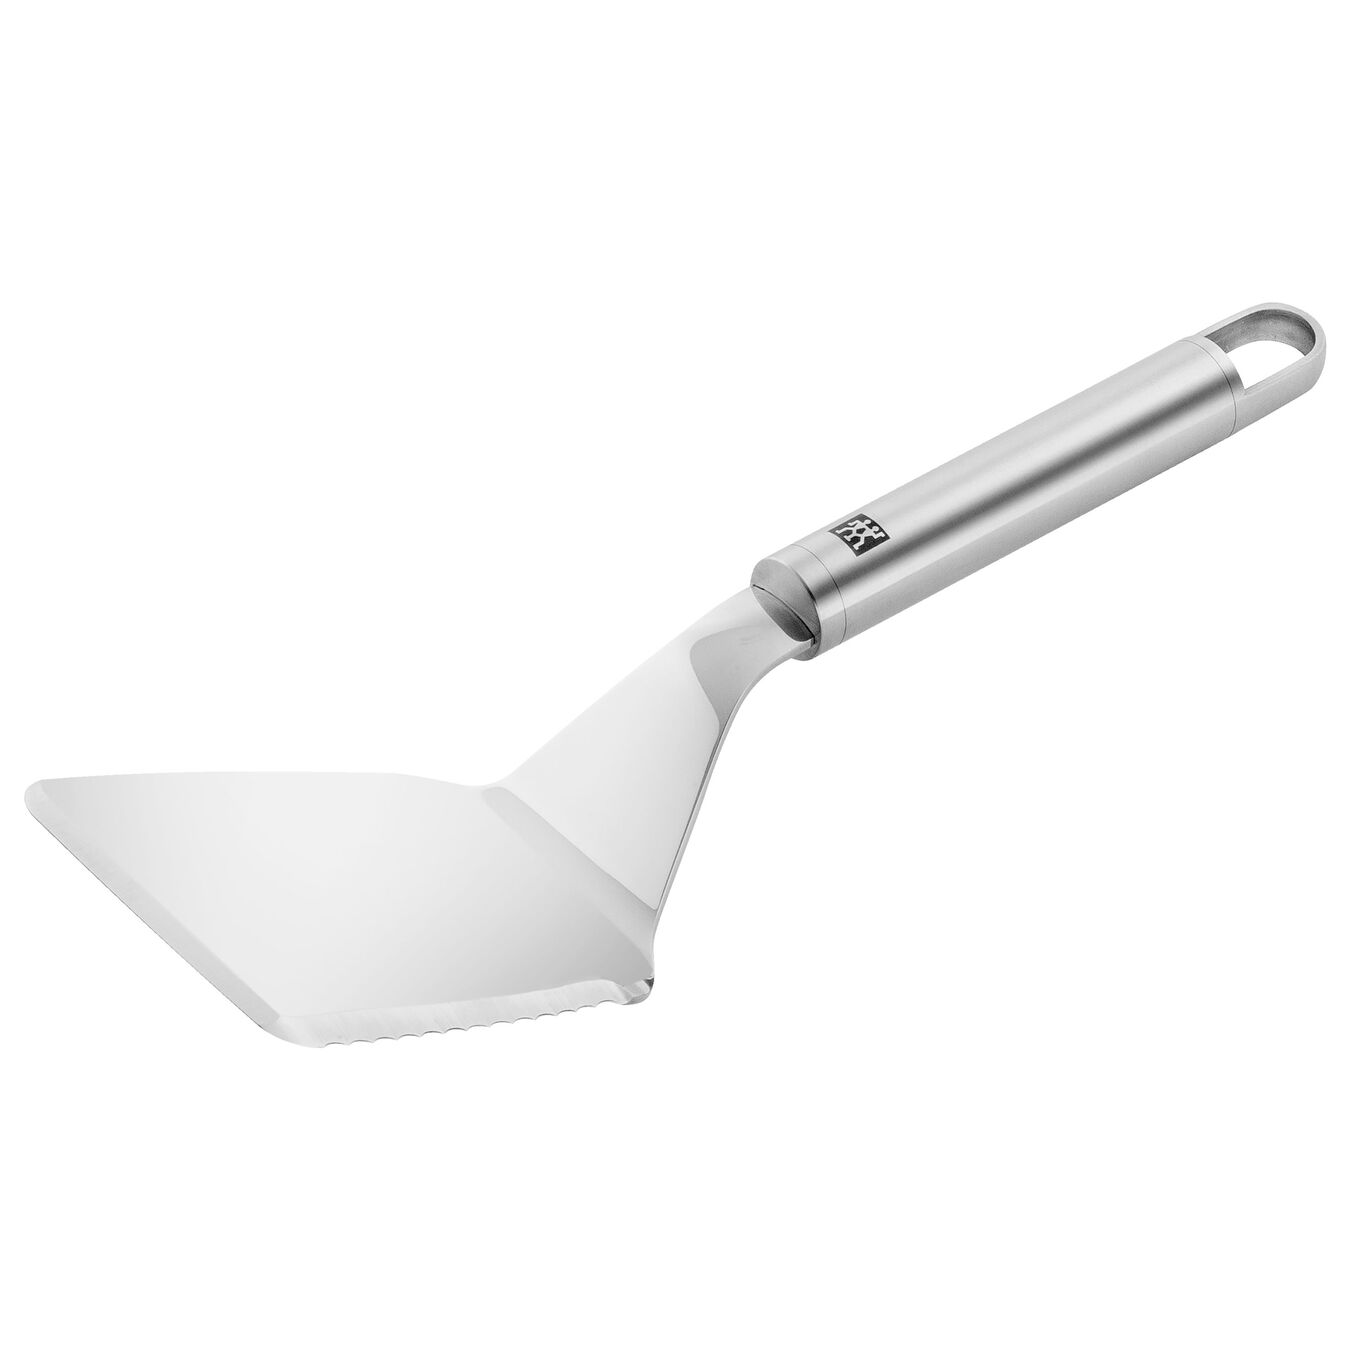 Lasagne spatula, 30 cm, 18/10 Stainless Steel,,large 1